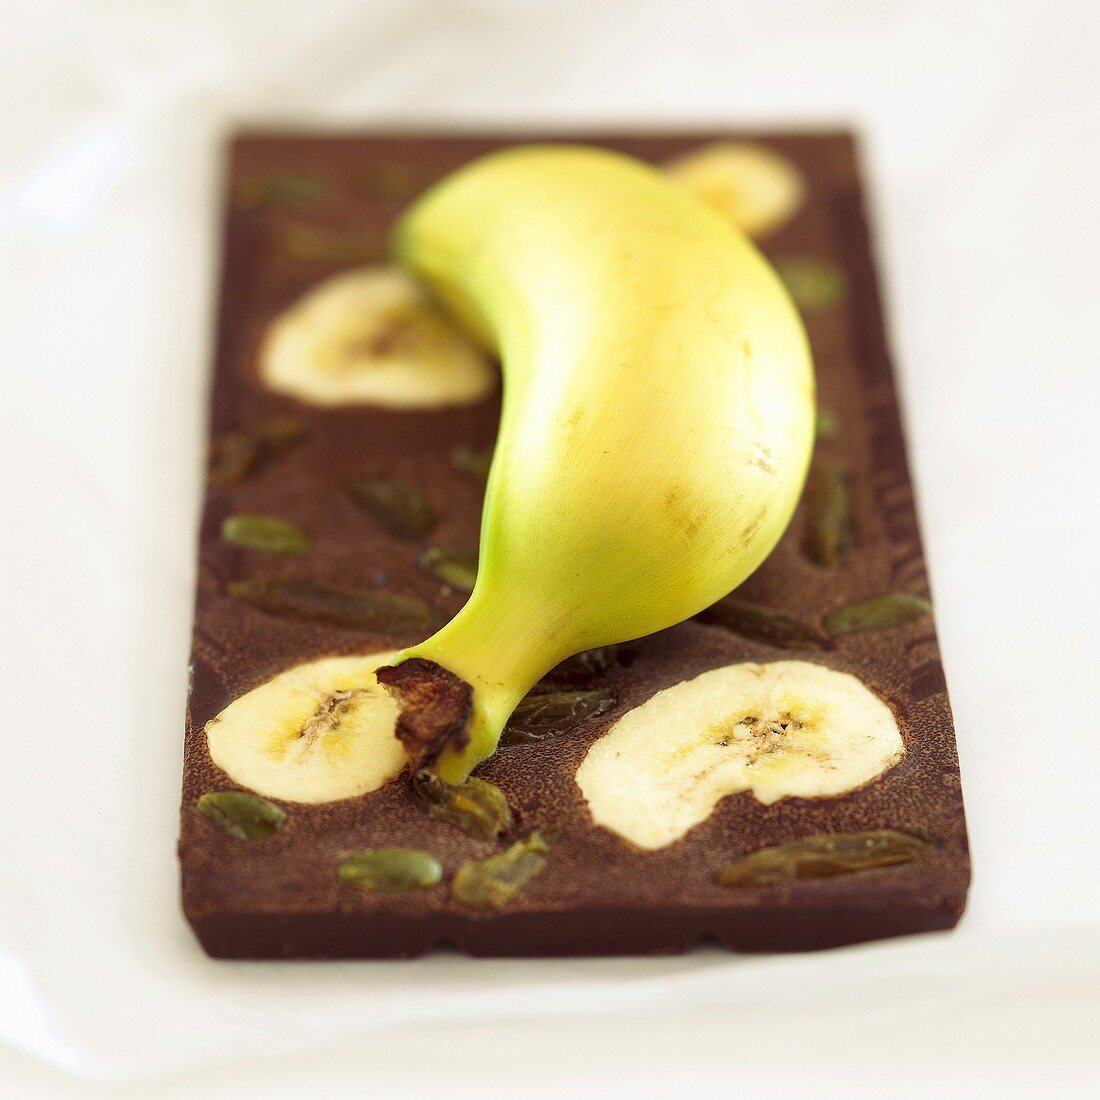 Chocolate with banana